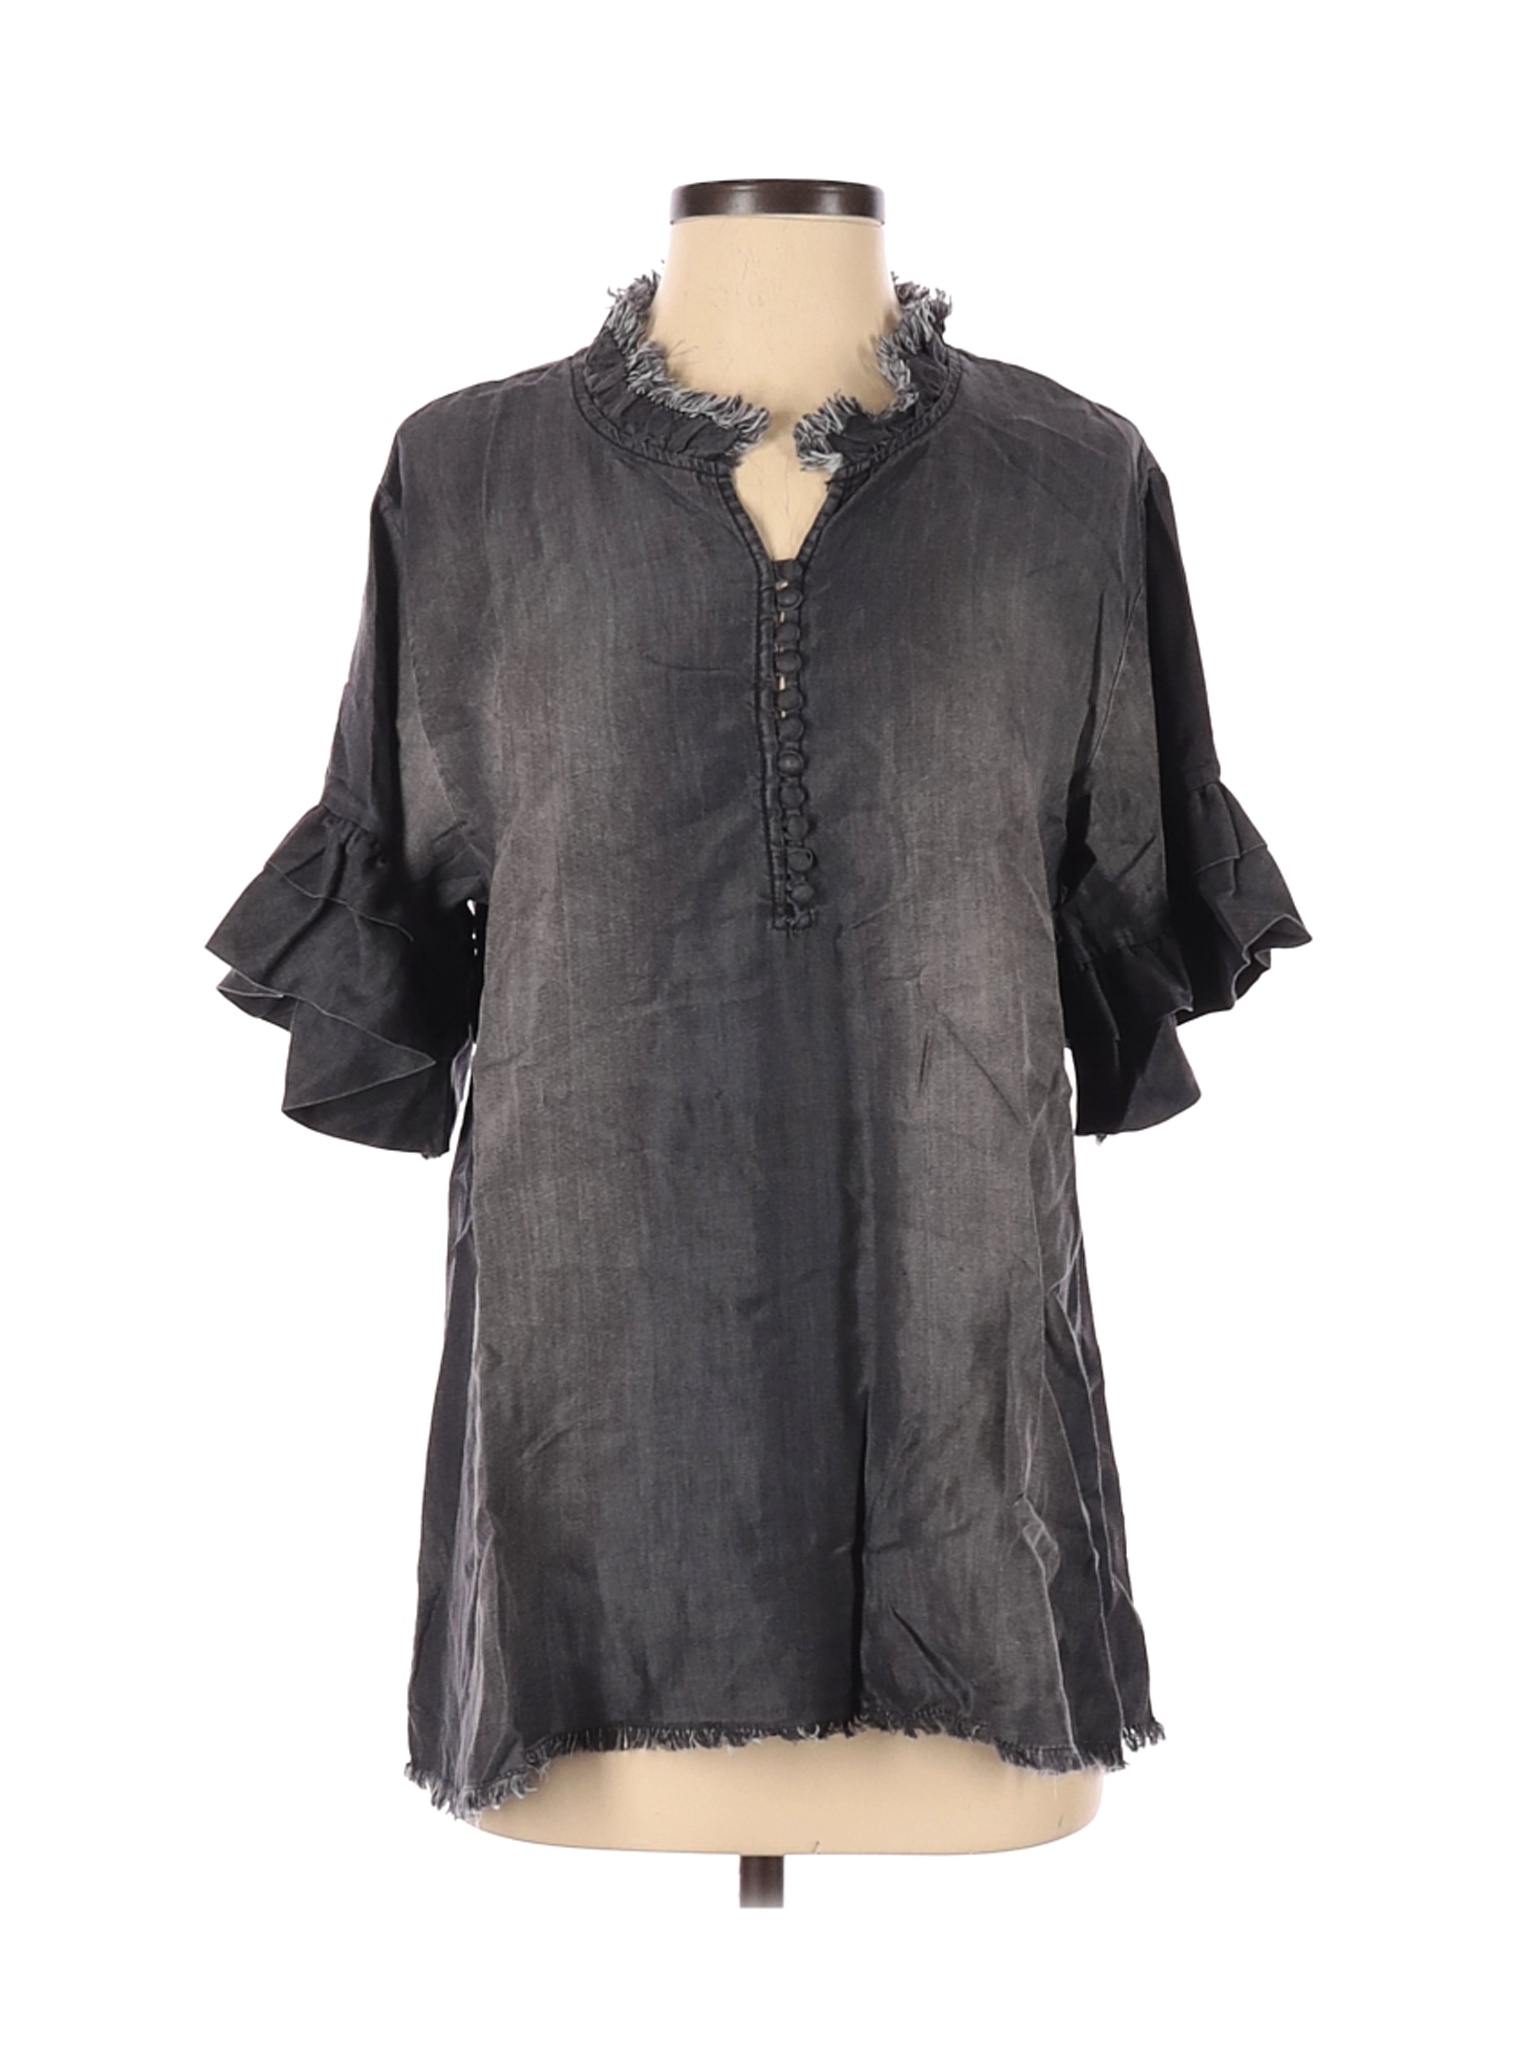 Indigo Thread Co. Women Gray Short Sleeve Blouse XS | eBay